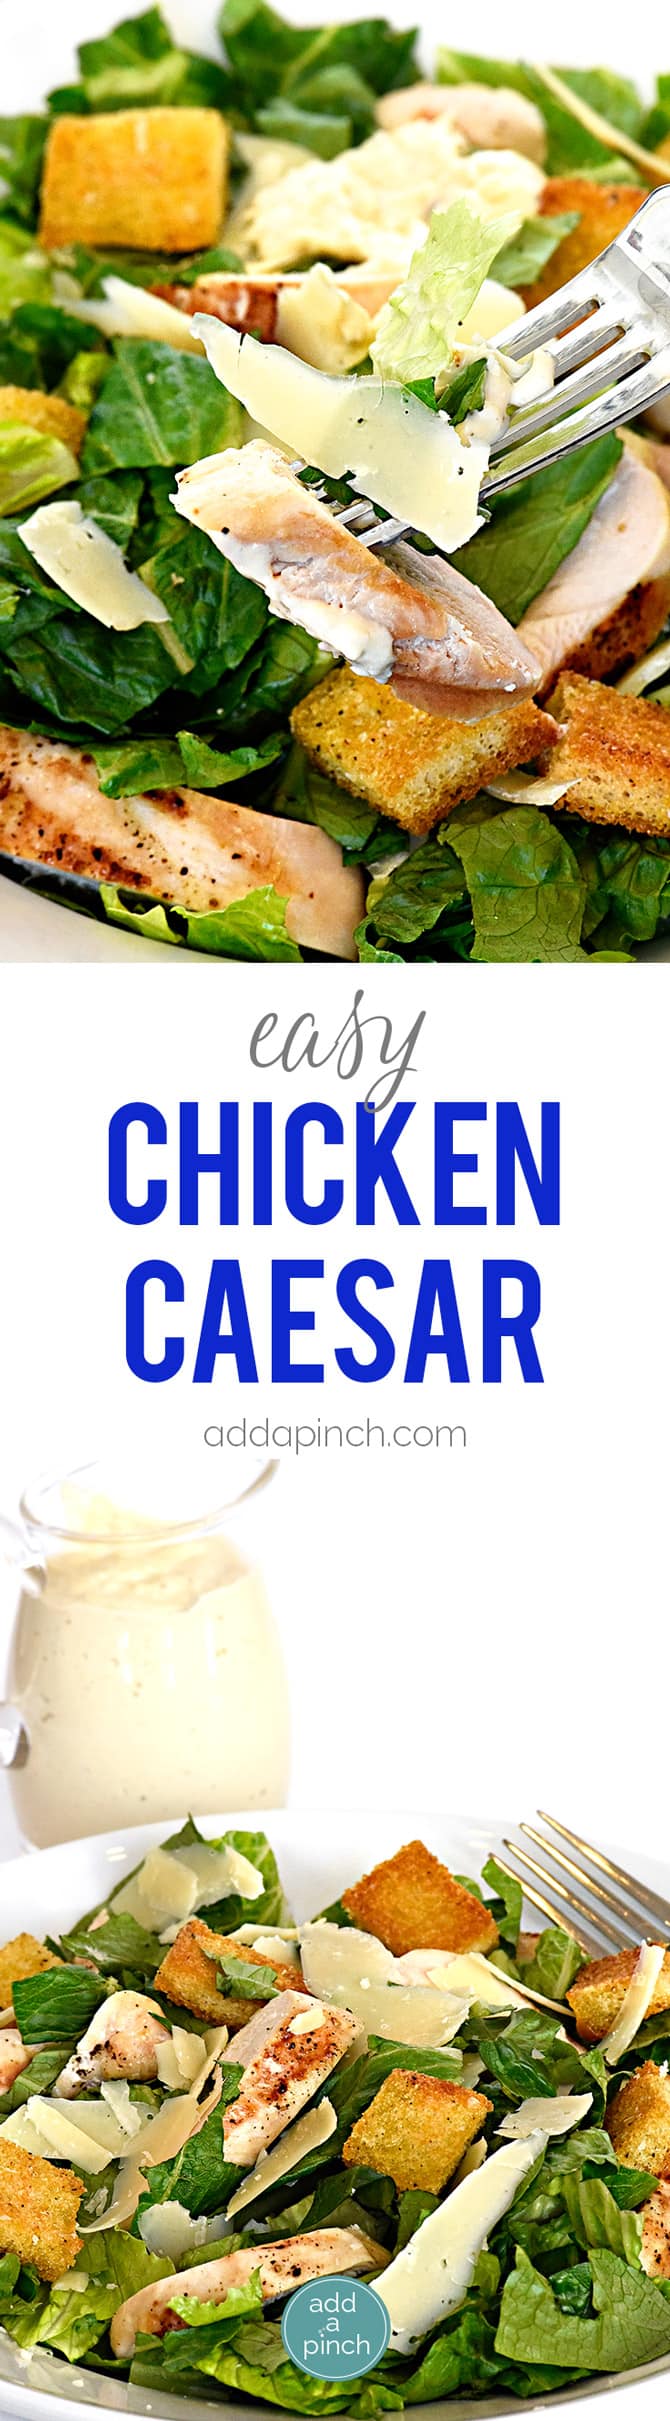 Chicken Caesar Salad Recipe - This Chicken Caesar Salad recipe makes an easy salad recipe perfect for lunch or supper! // addapinch.com